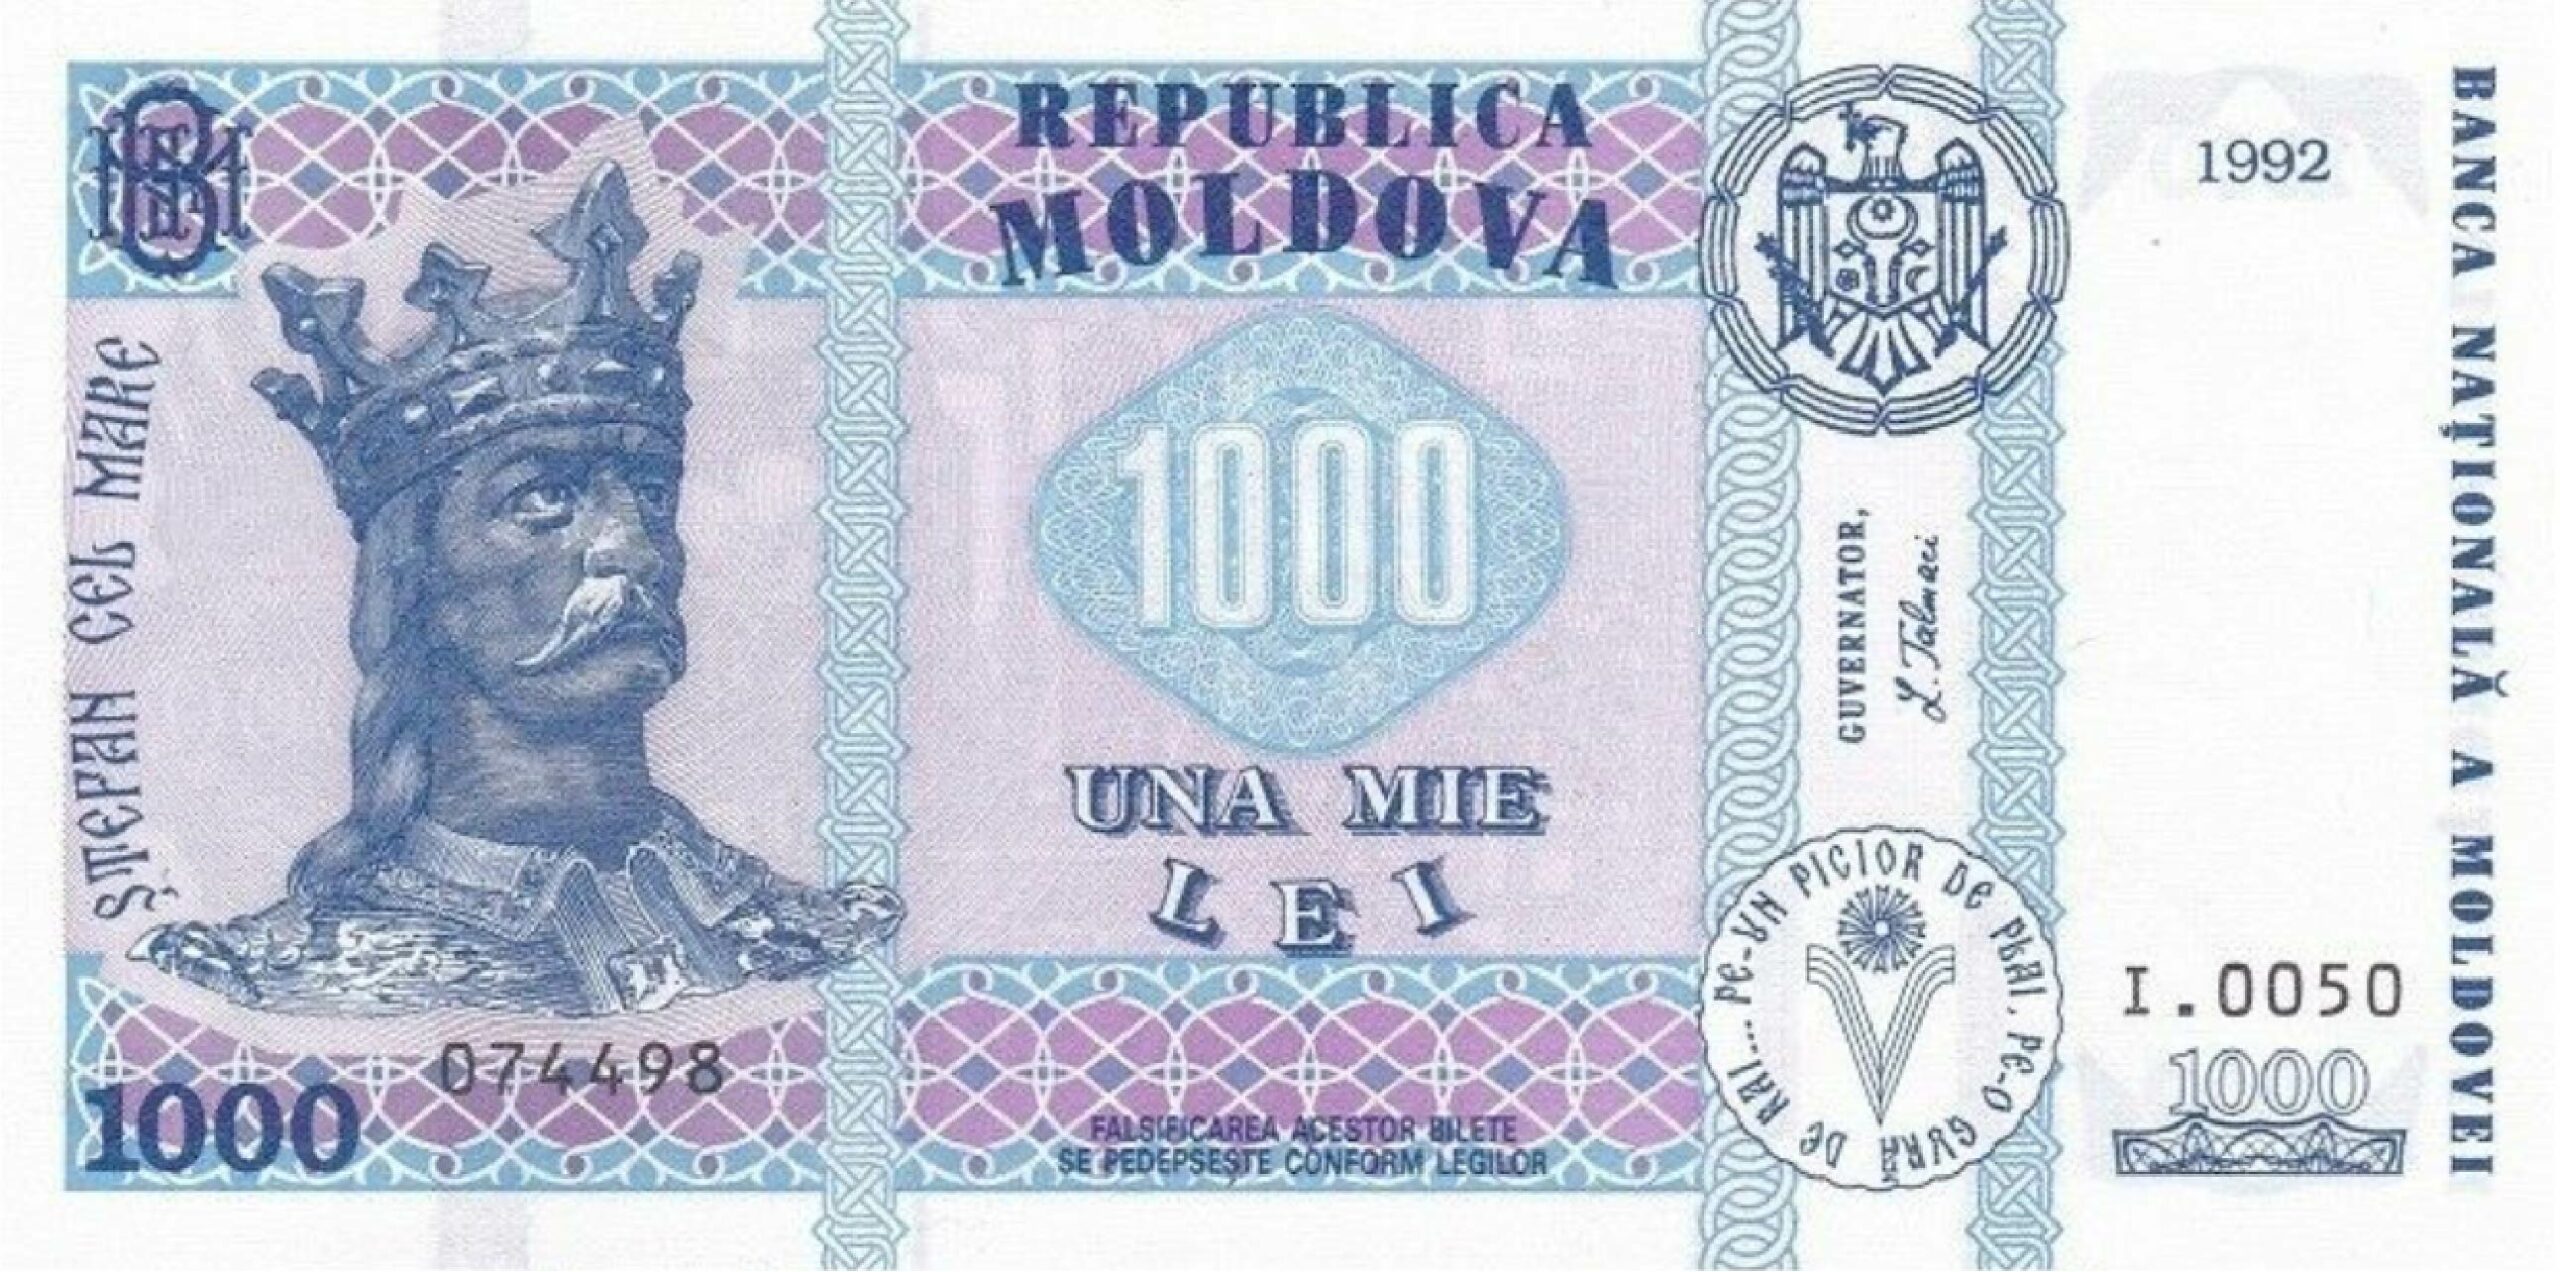 1000 Moldovan Lei banknote